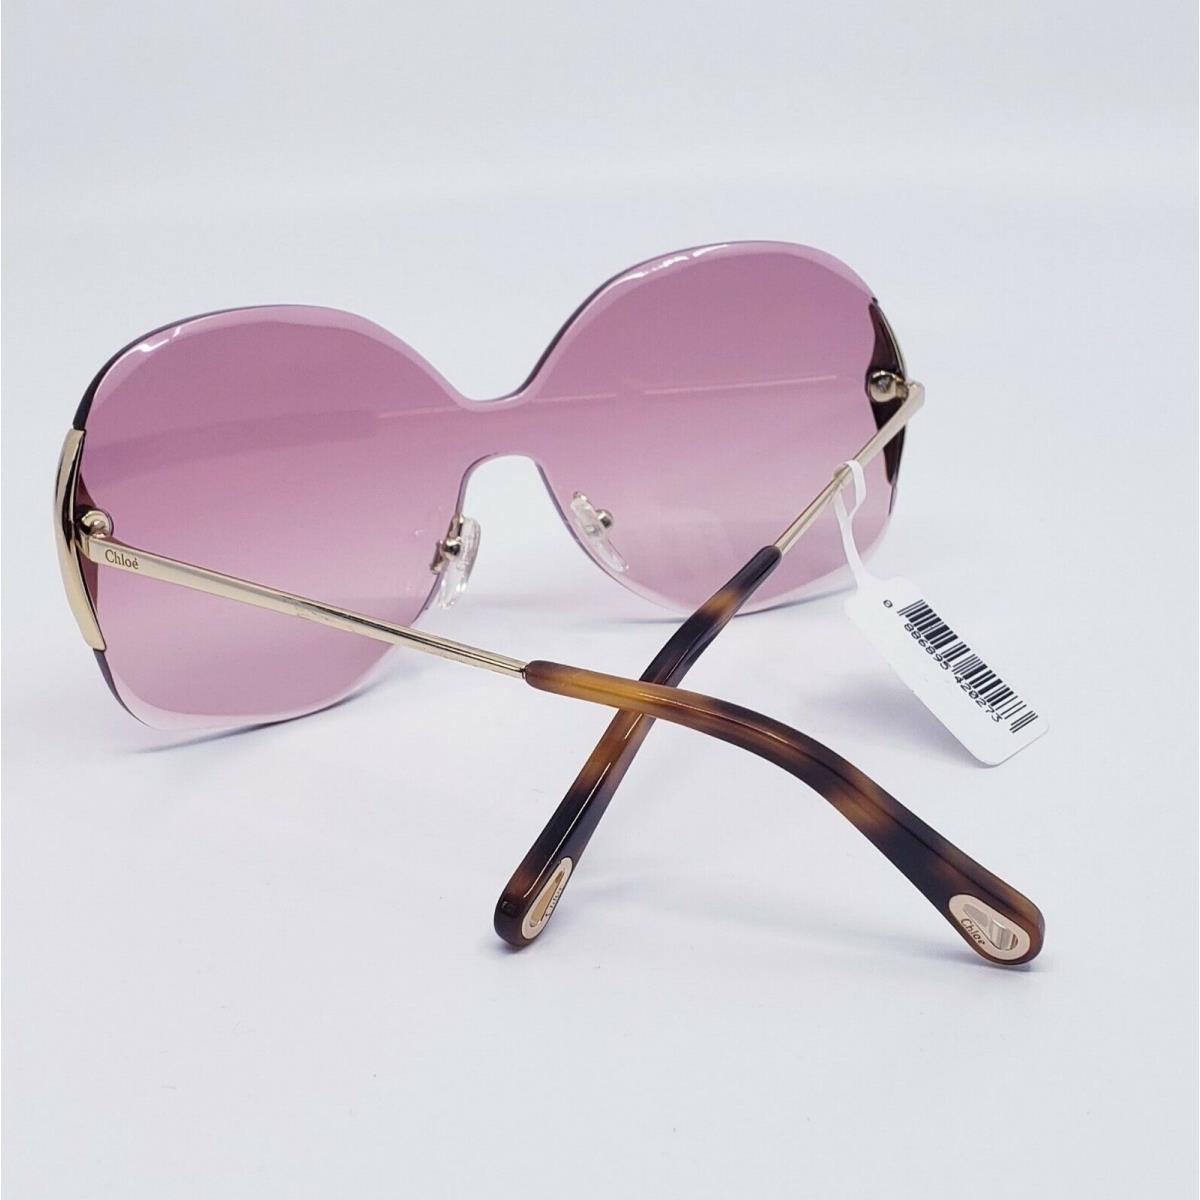 Chloé sunglasses  - Gold Frame, Pink Lens 6